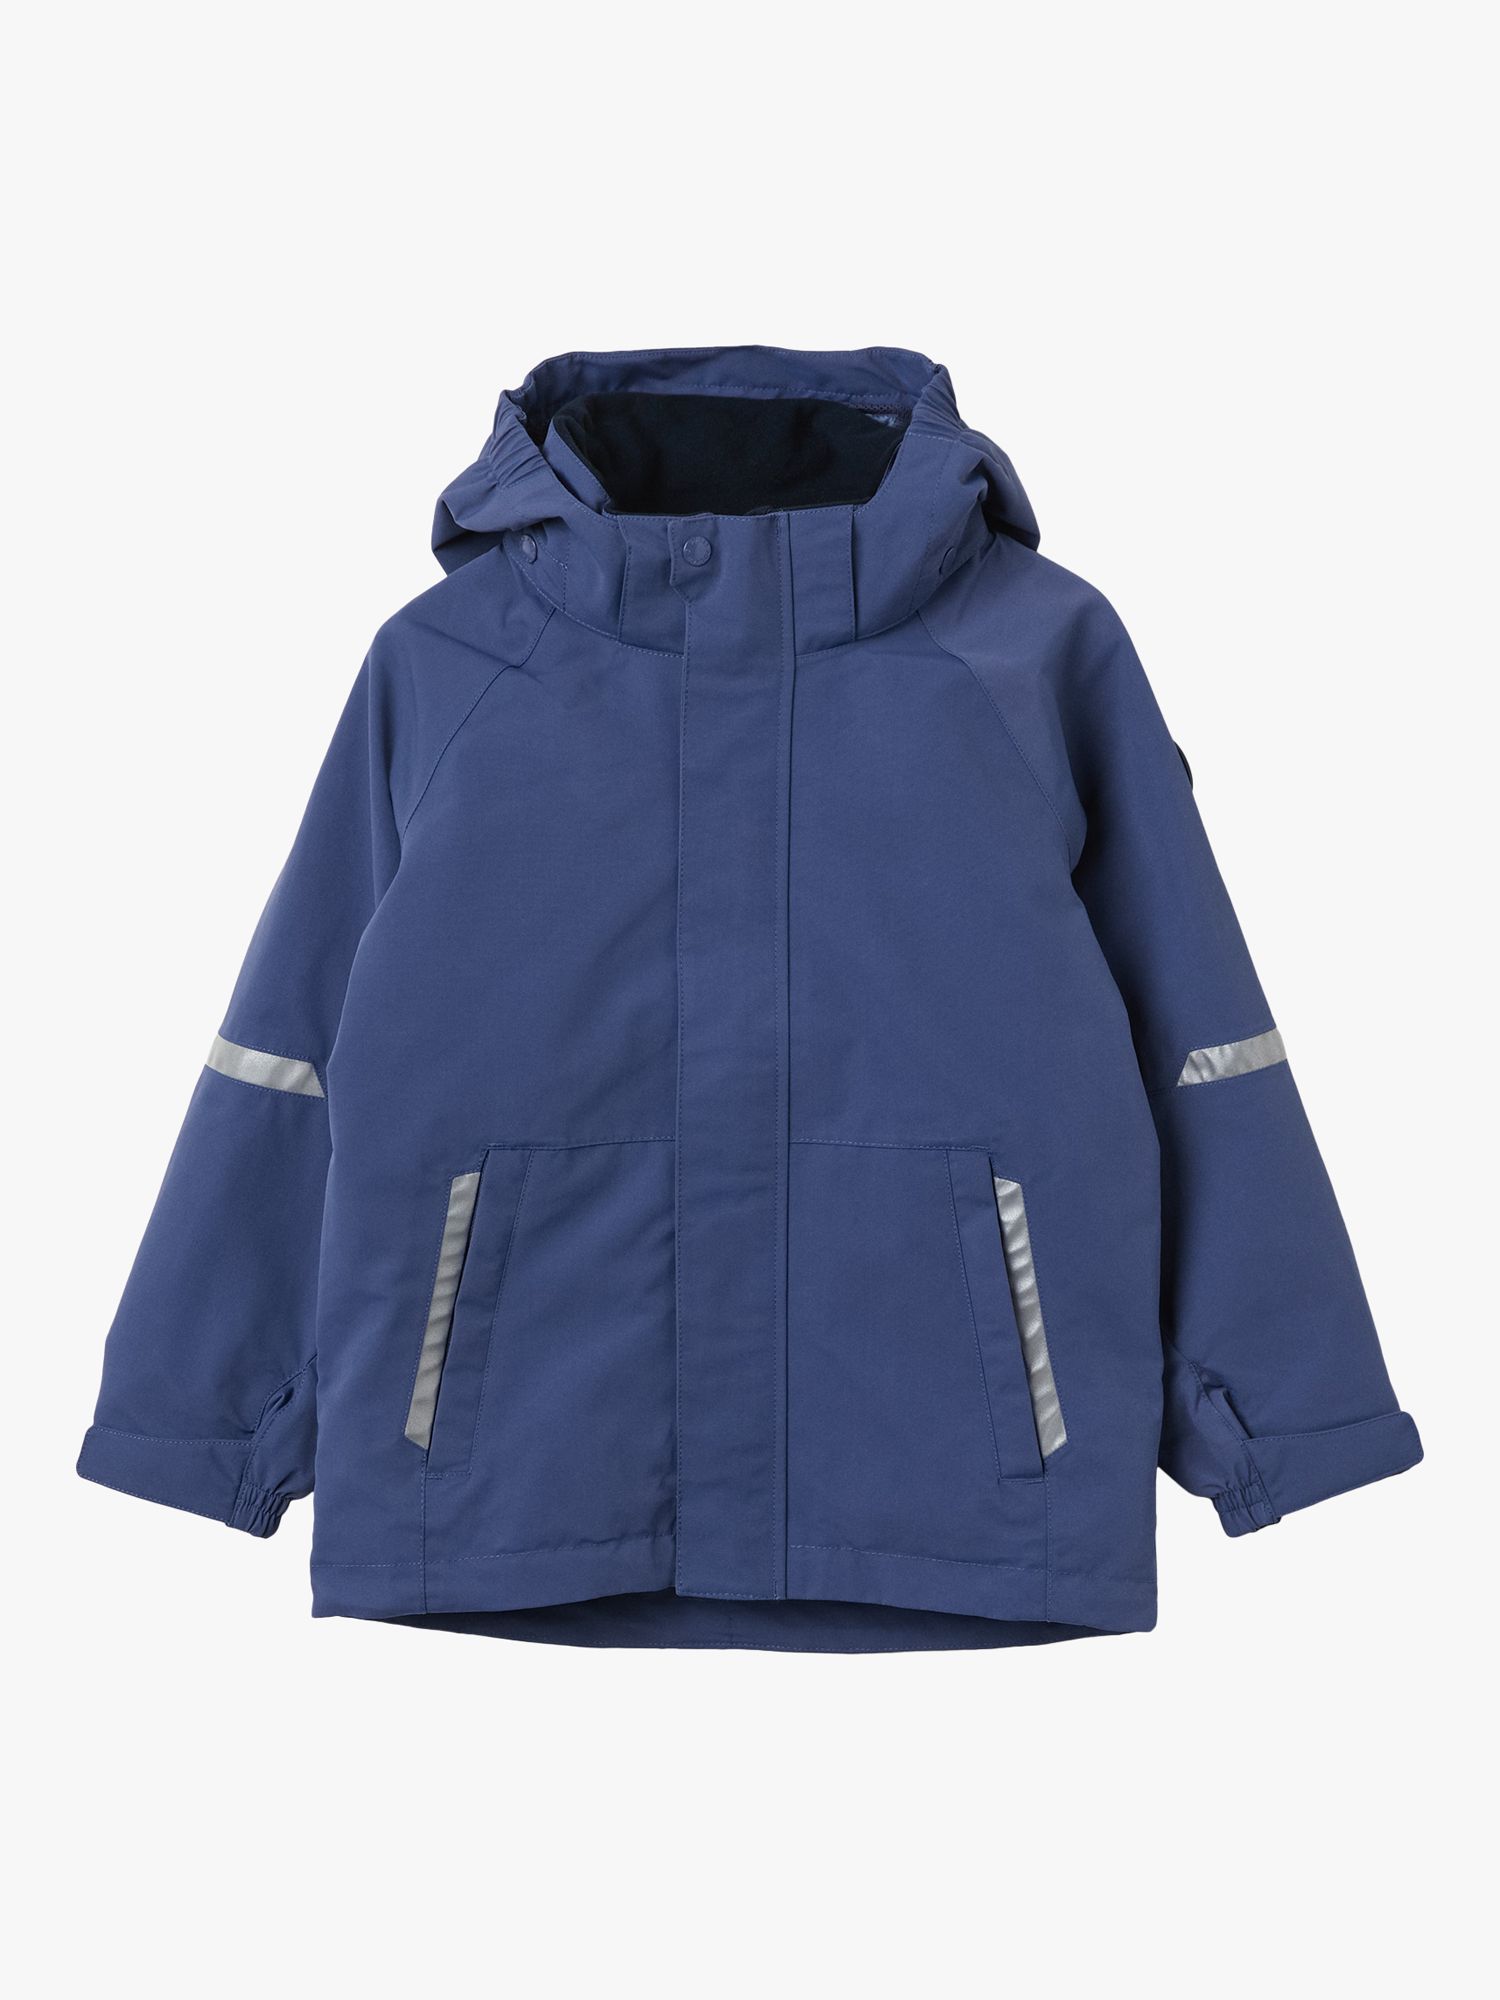 Polarn O. Pyret Kids' Waterproof Shell Coat, Blue at John Lewis & Partners